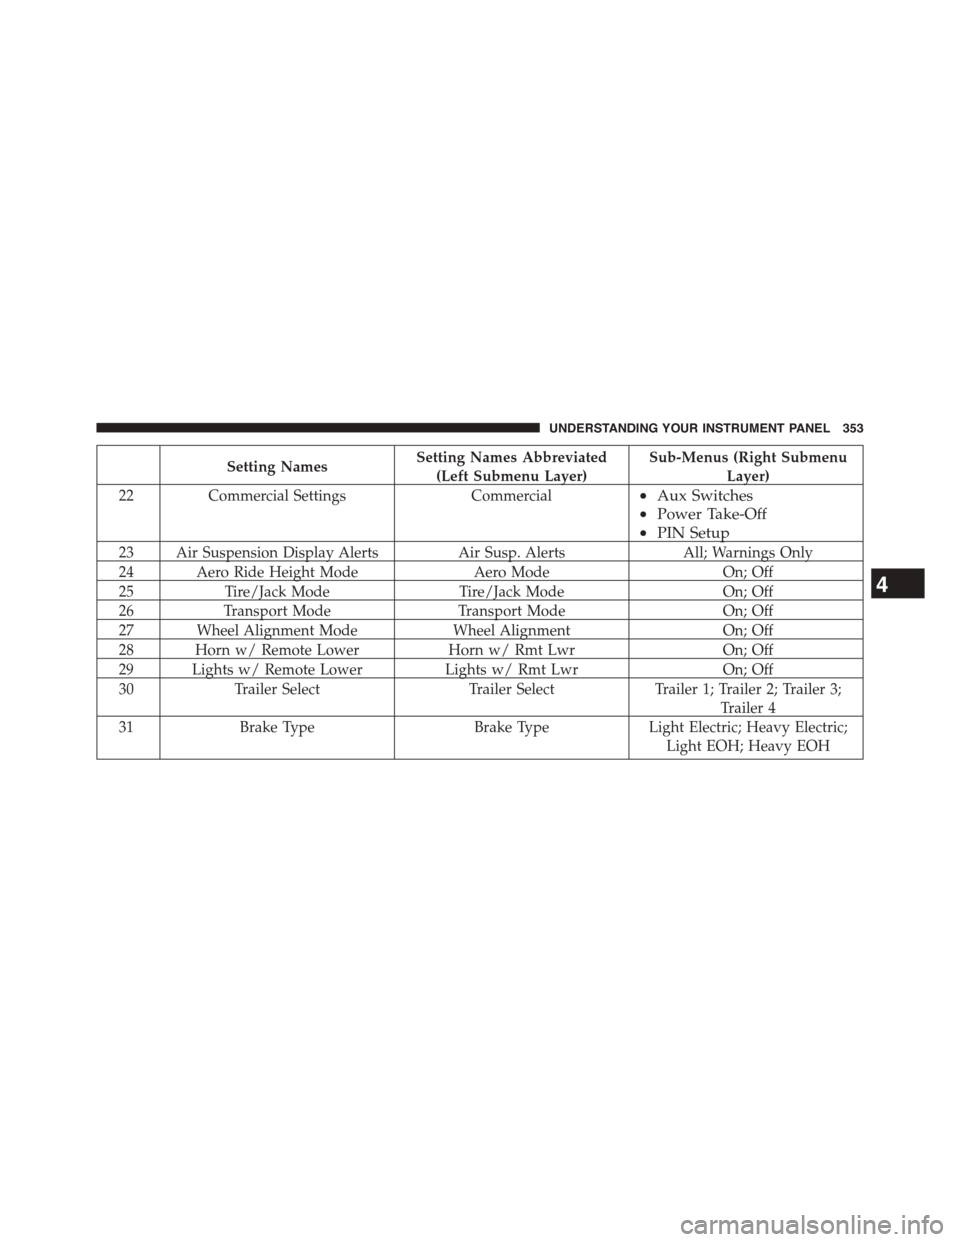 Ram 1500 2015 Owners Guide Setting NamesSetting Names Abbreviated
(Left Submenu Layer)
Sub-Menus (Right Submenu
Layer)
22Commercial SettingsCommercial•Aux Switches
•Power Take-Off
•PIN Setup
23 Air Suspension Display Aler